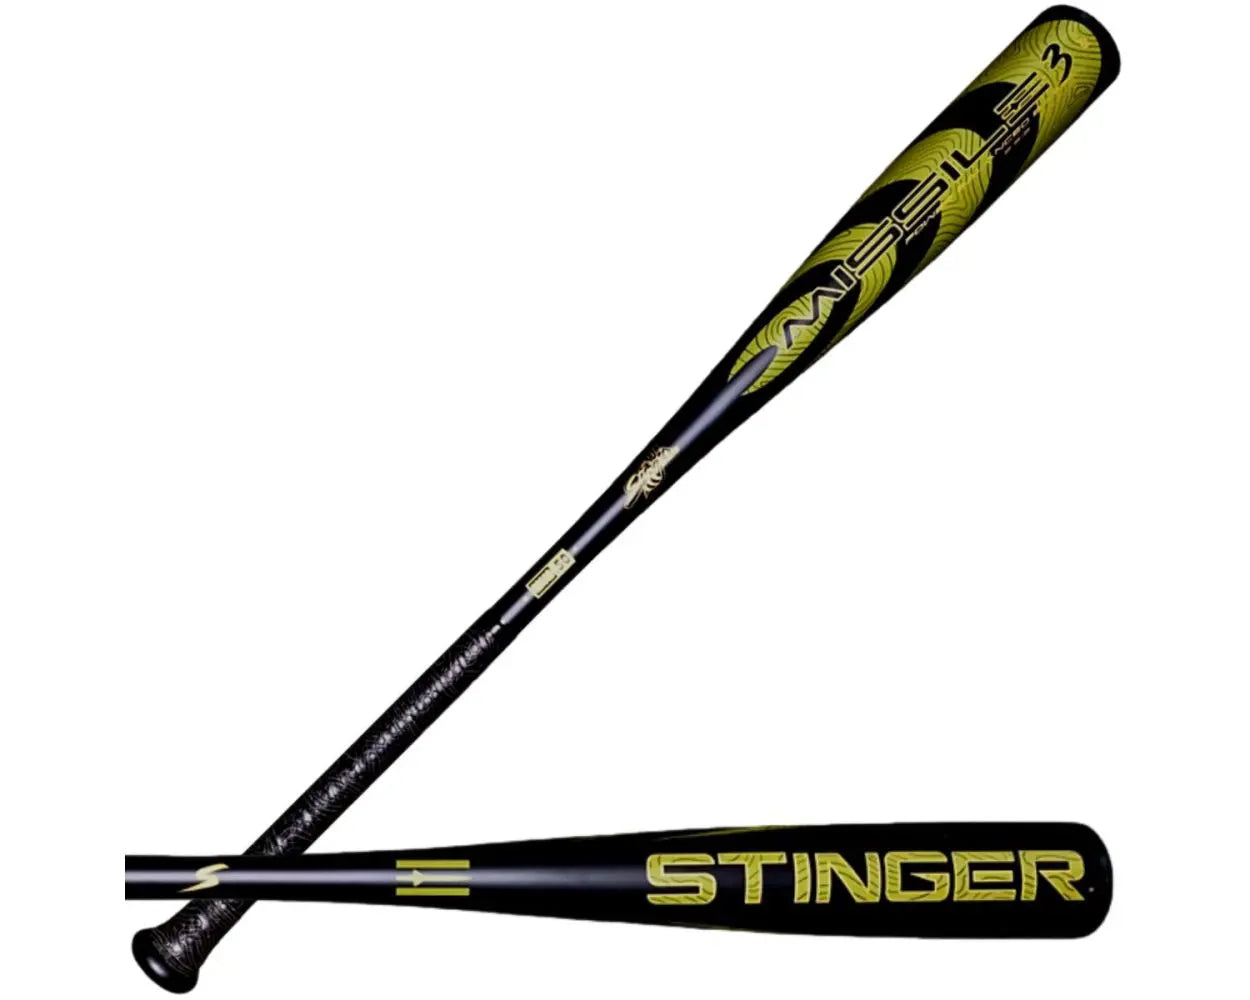 Stinger - MISSILE 3 BBCOR METAL BASEBALL BAT